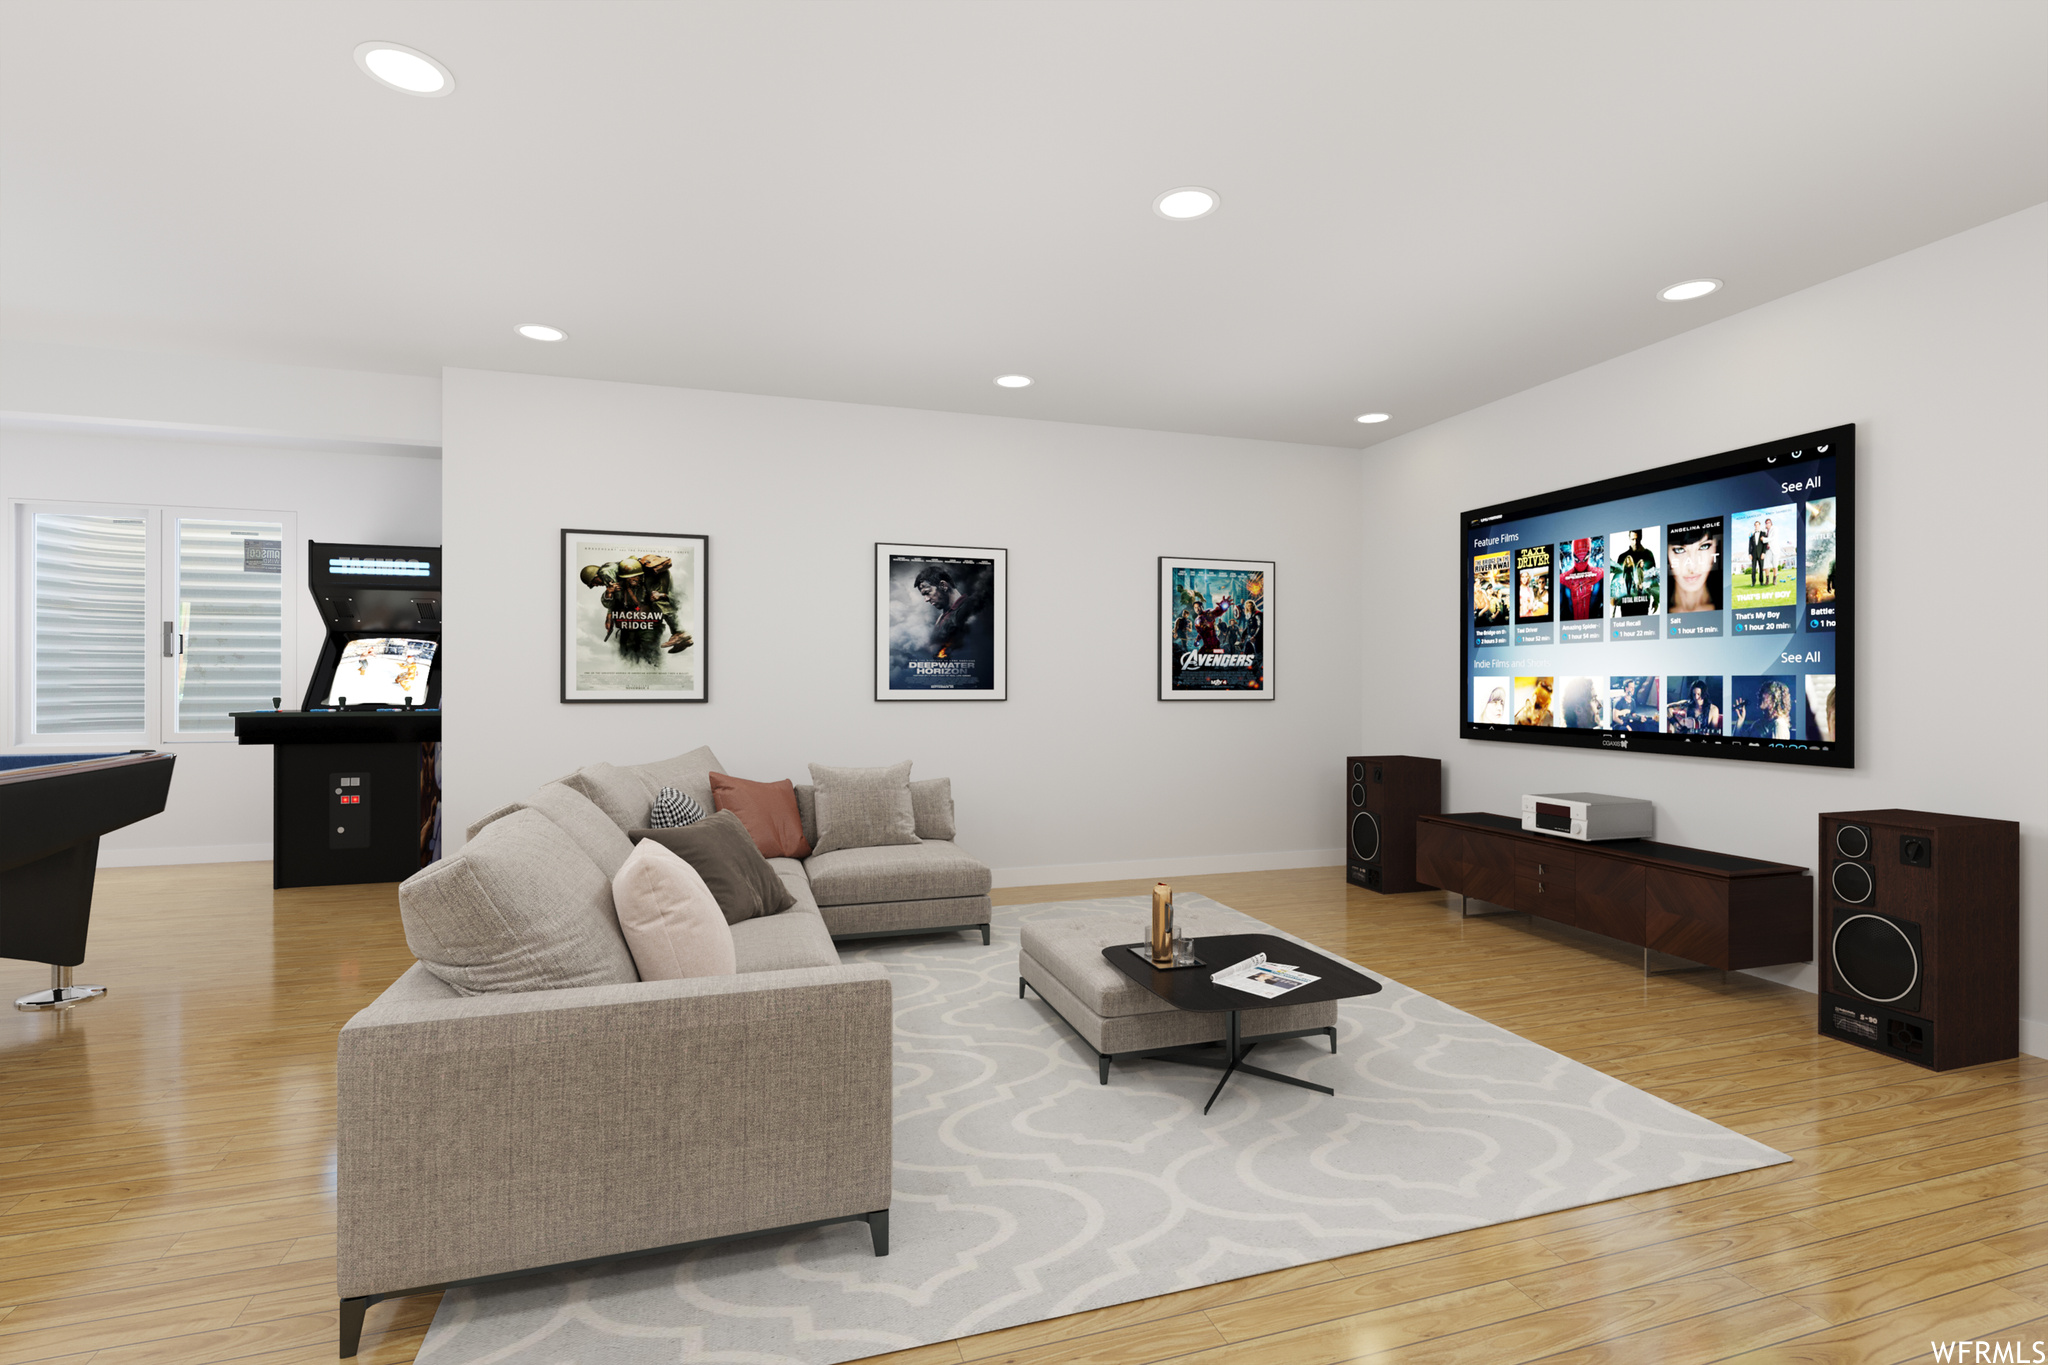 Virtually StaHardwood floored living room featuring TV